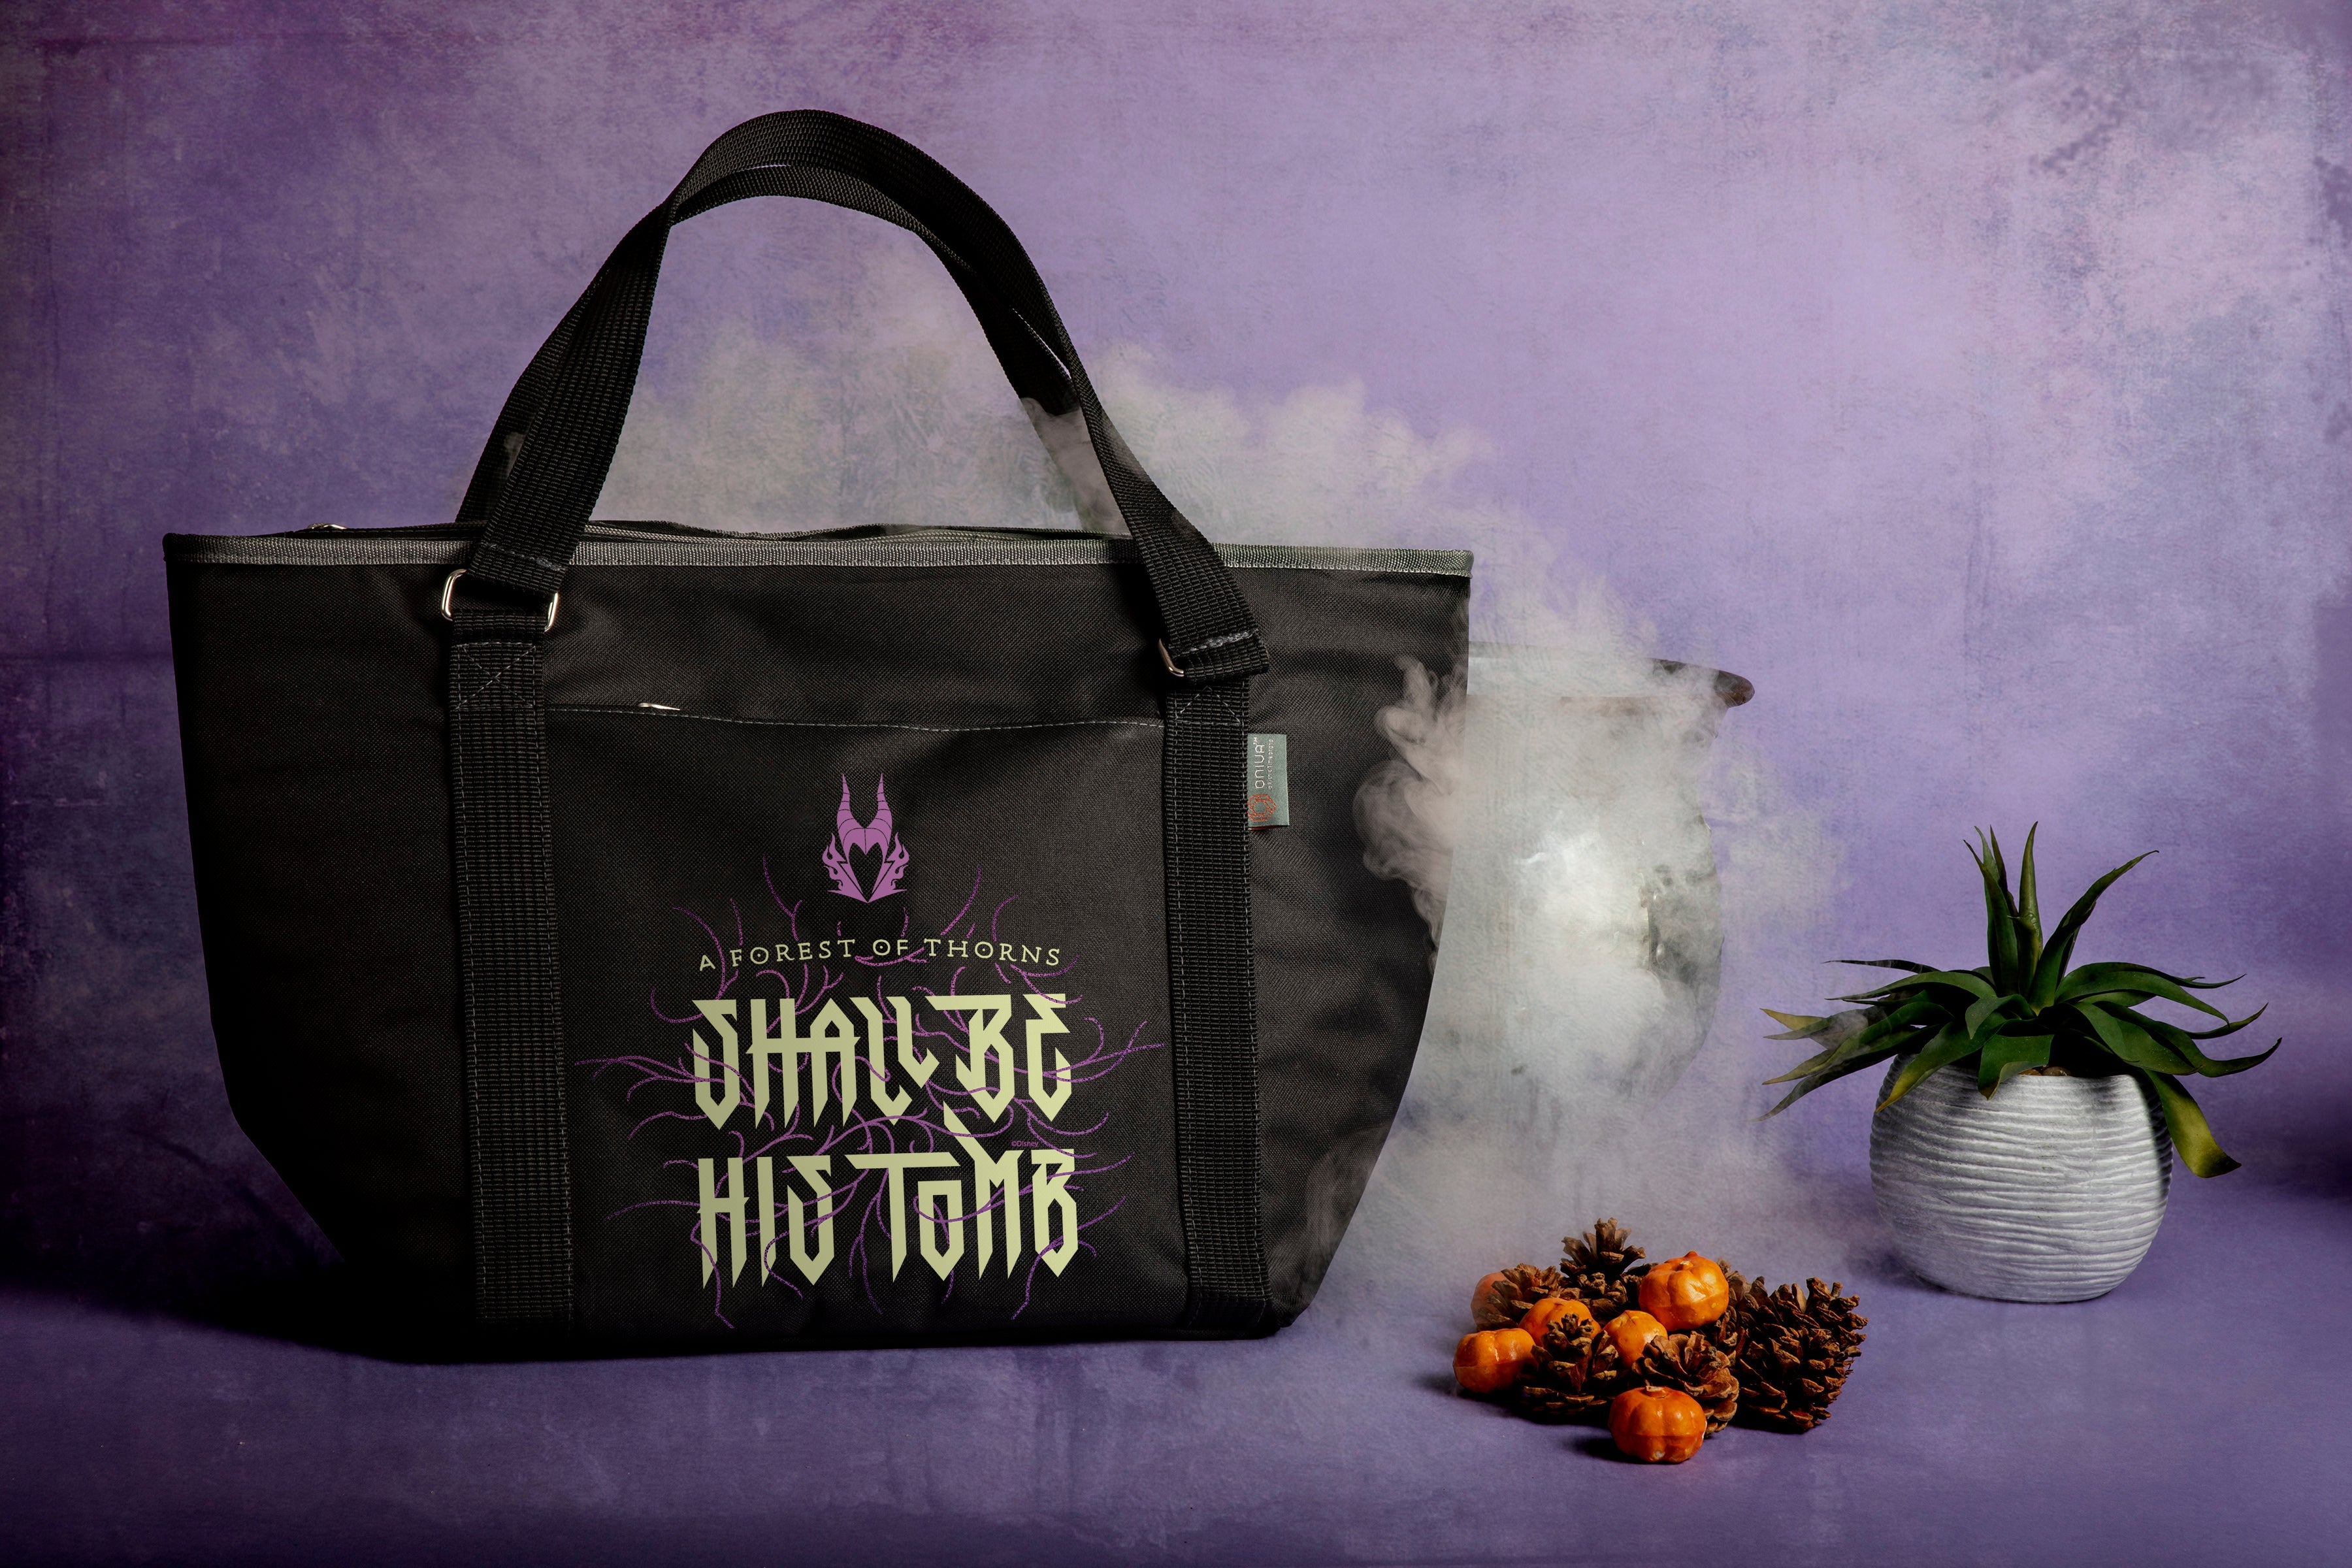 Sleeping Beauty Maleficent - Topanga Cooler Tote Bag